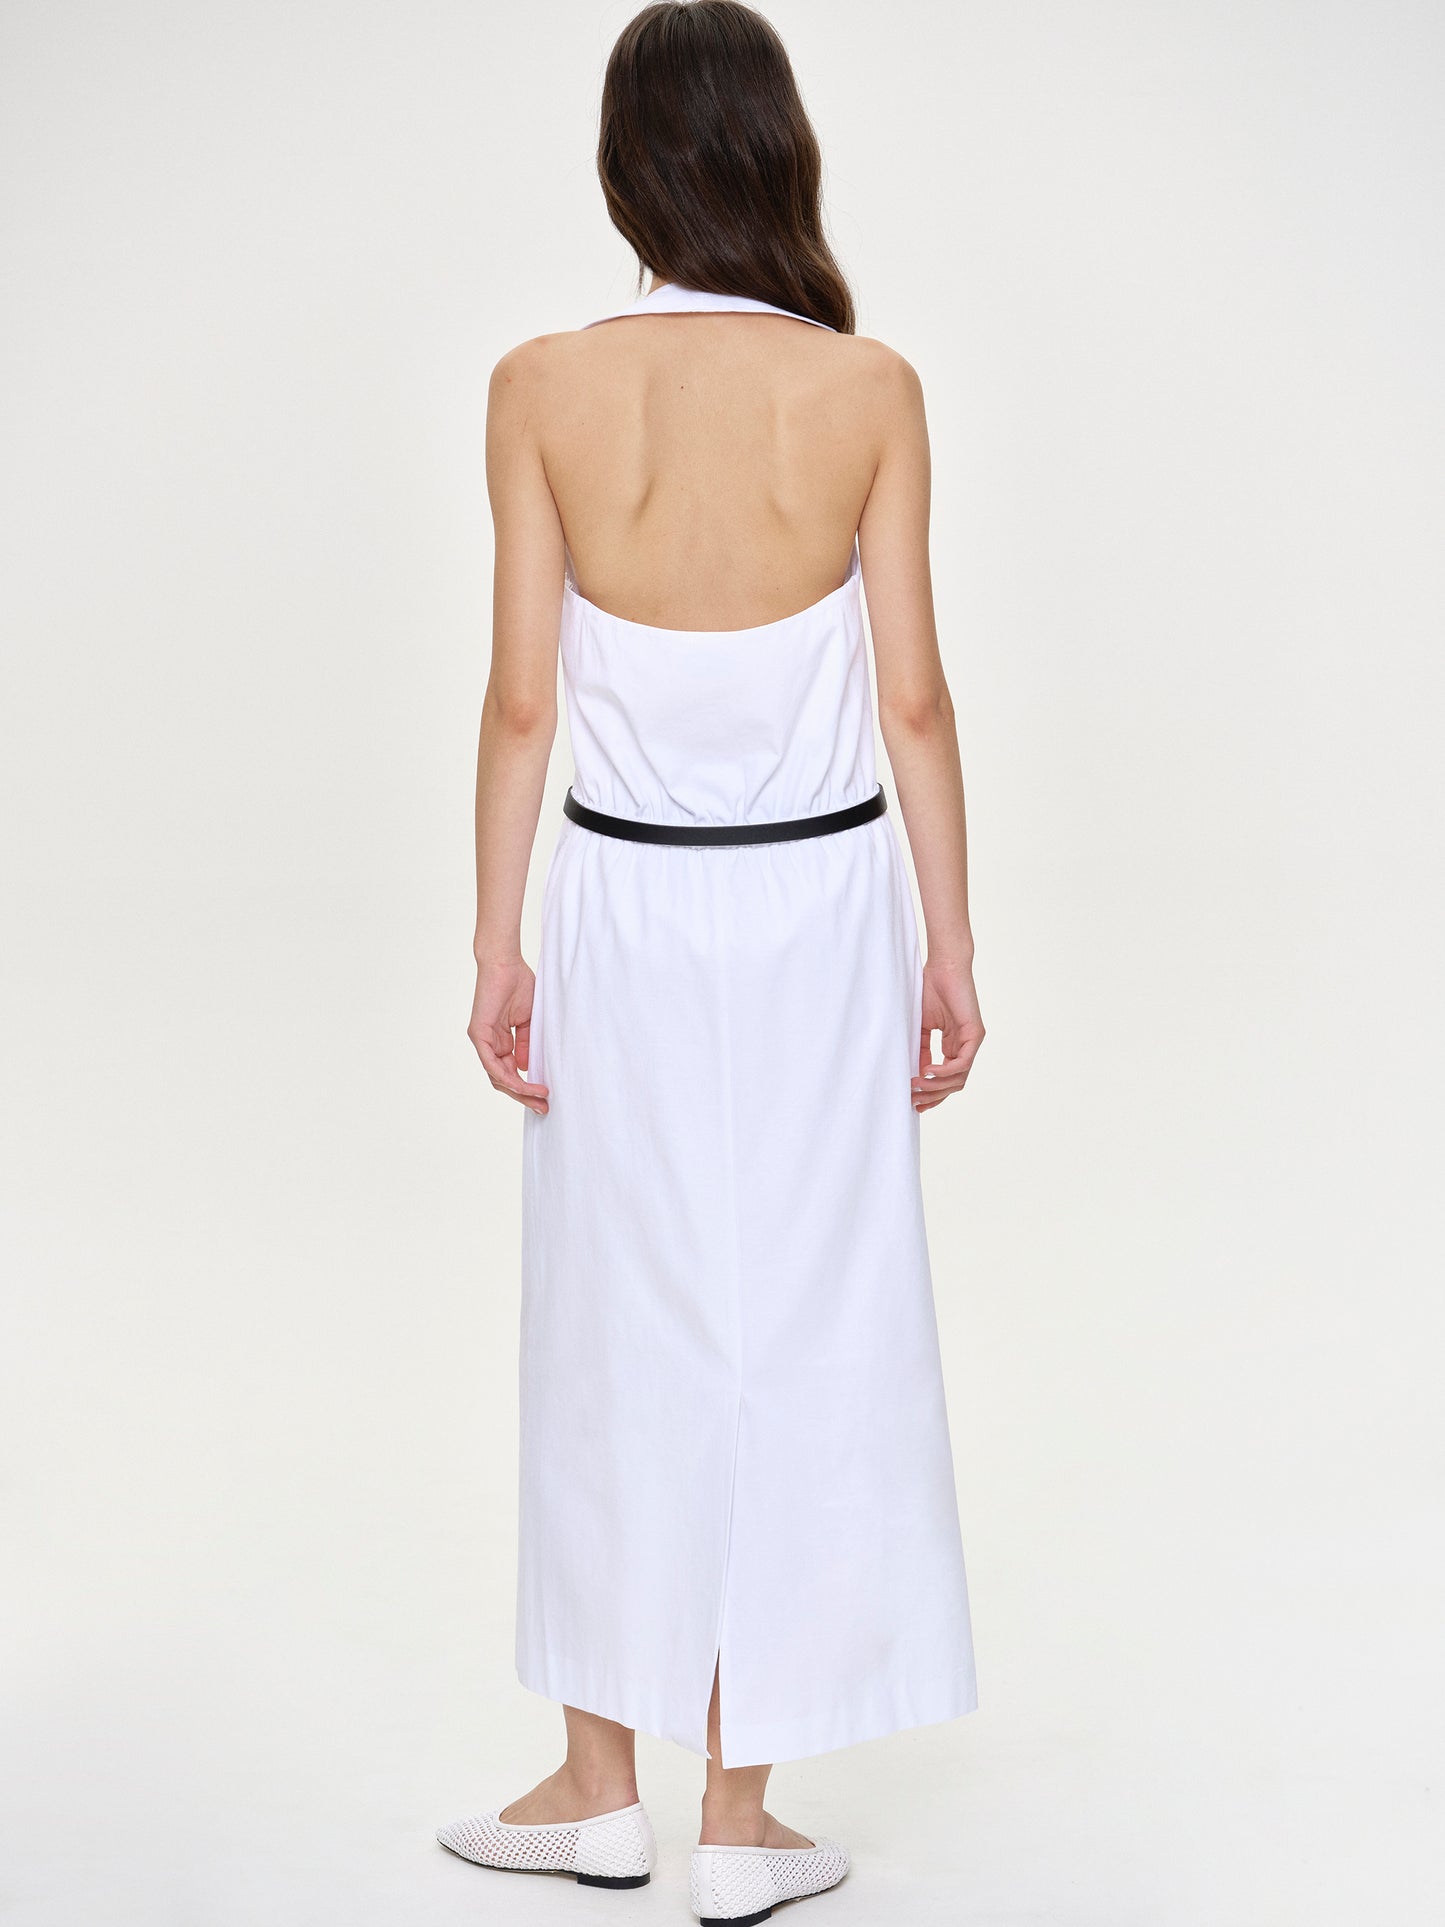 Belted Linen Dress, White